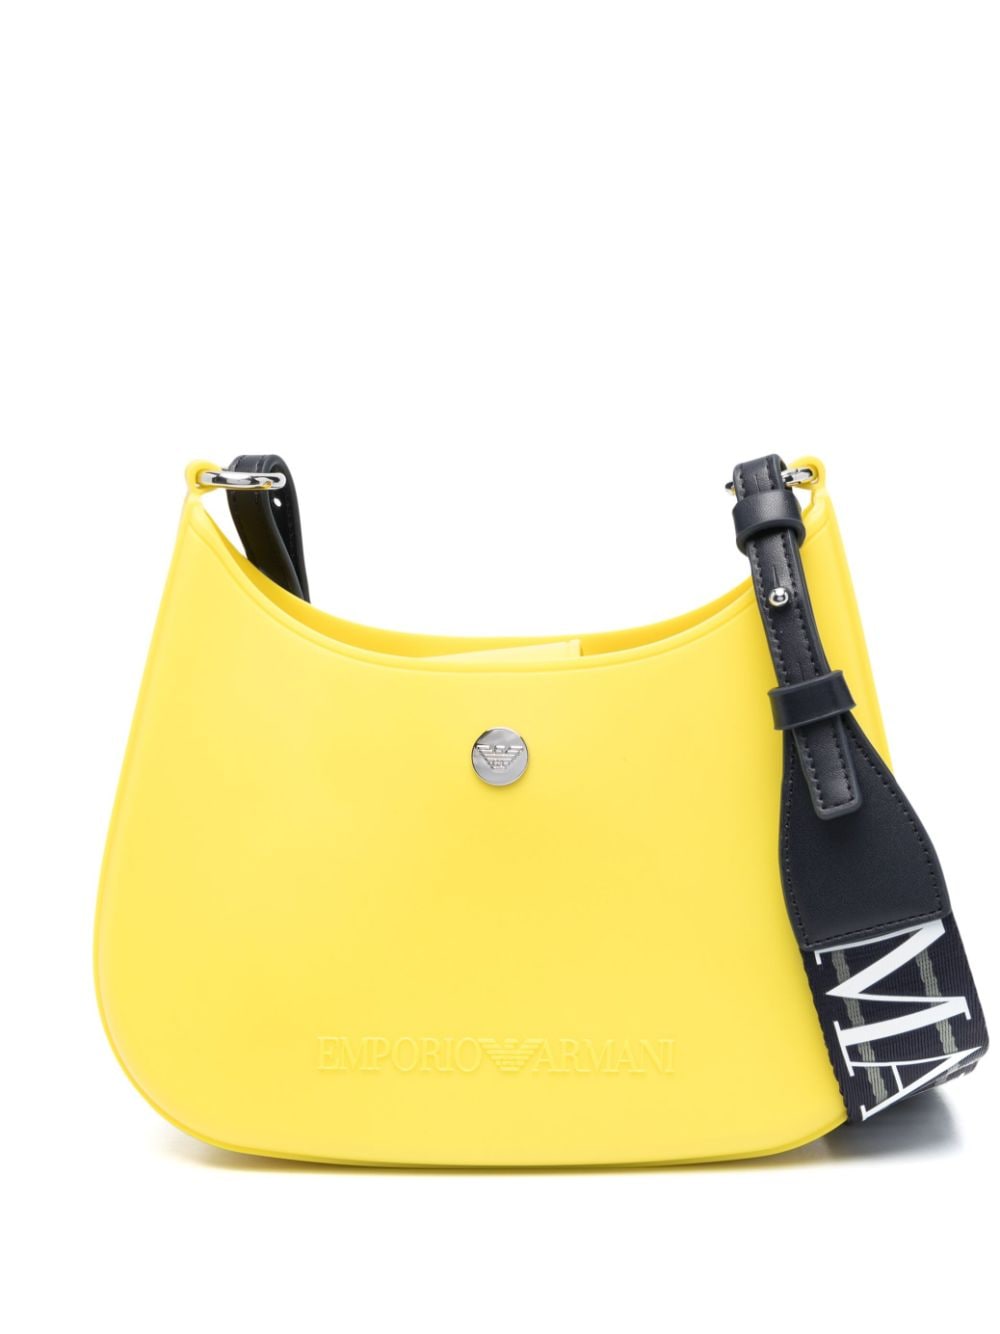 Emporio Armani crossbody bags women Y3H329YWI7E80632 Yellow - Navy bag